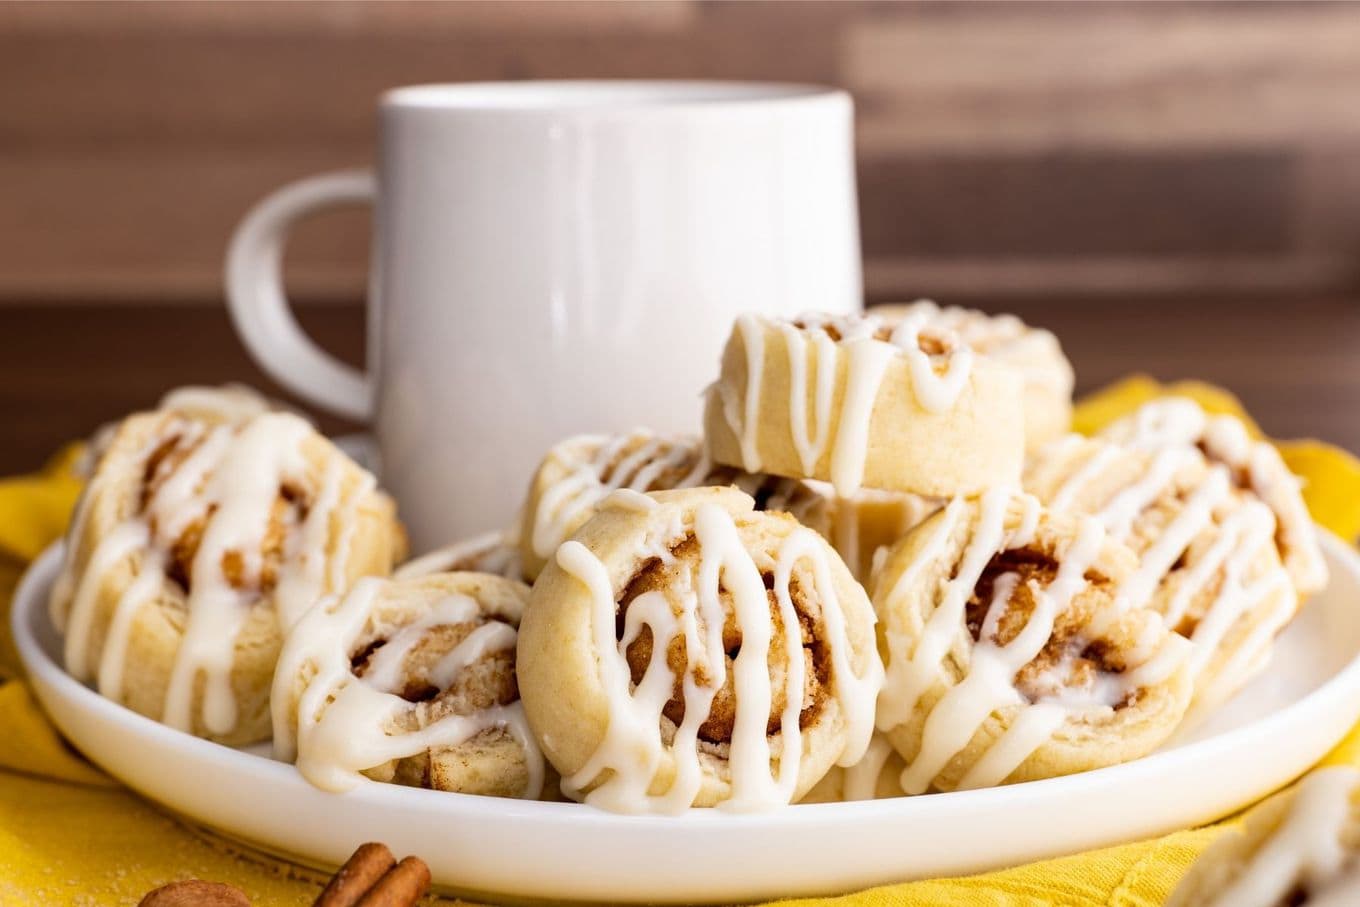 Cinnamon Roll Sugar Cookies on plate with coffee cup